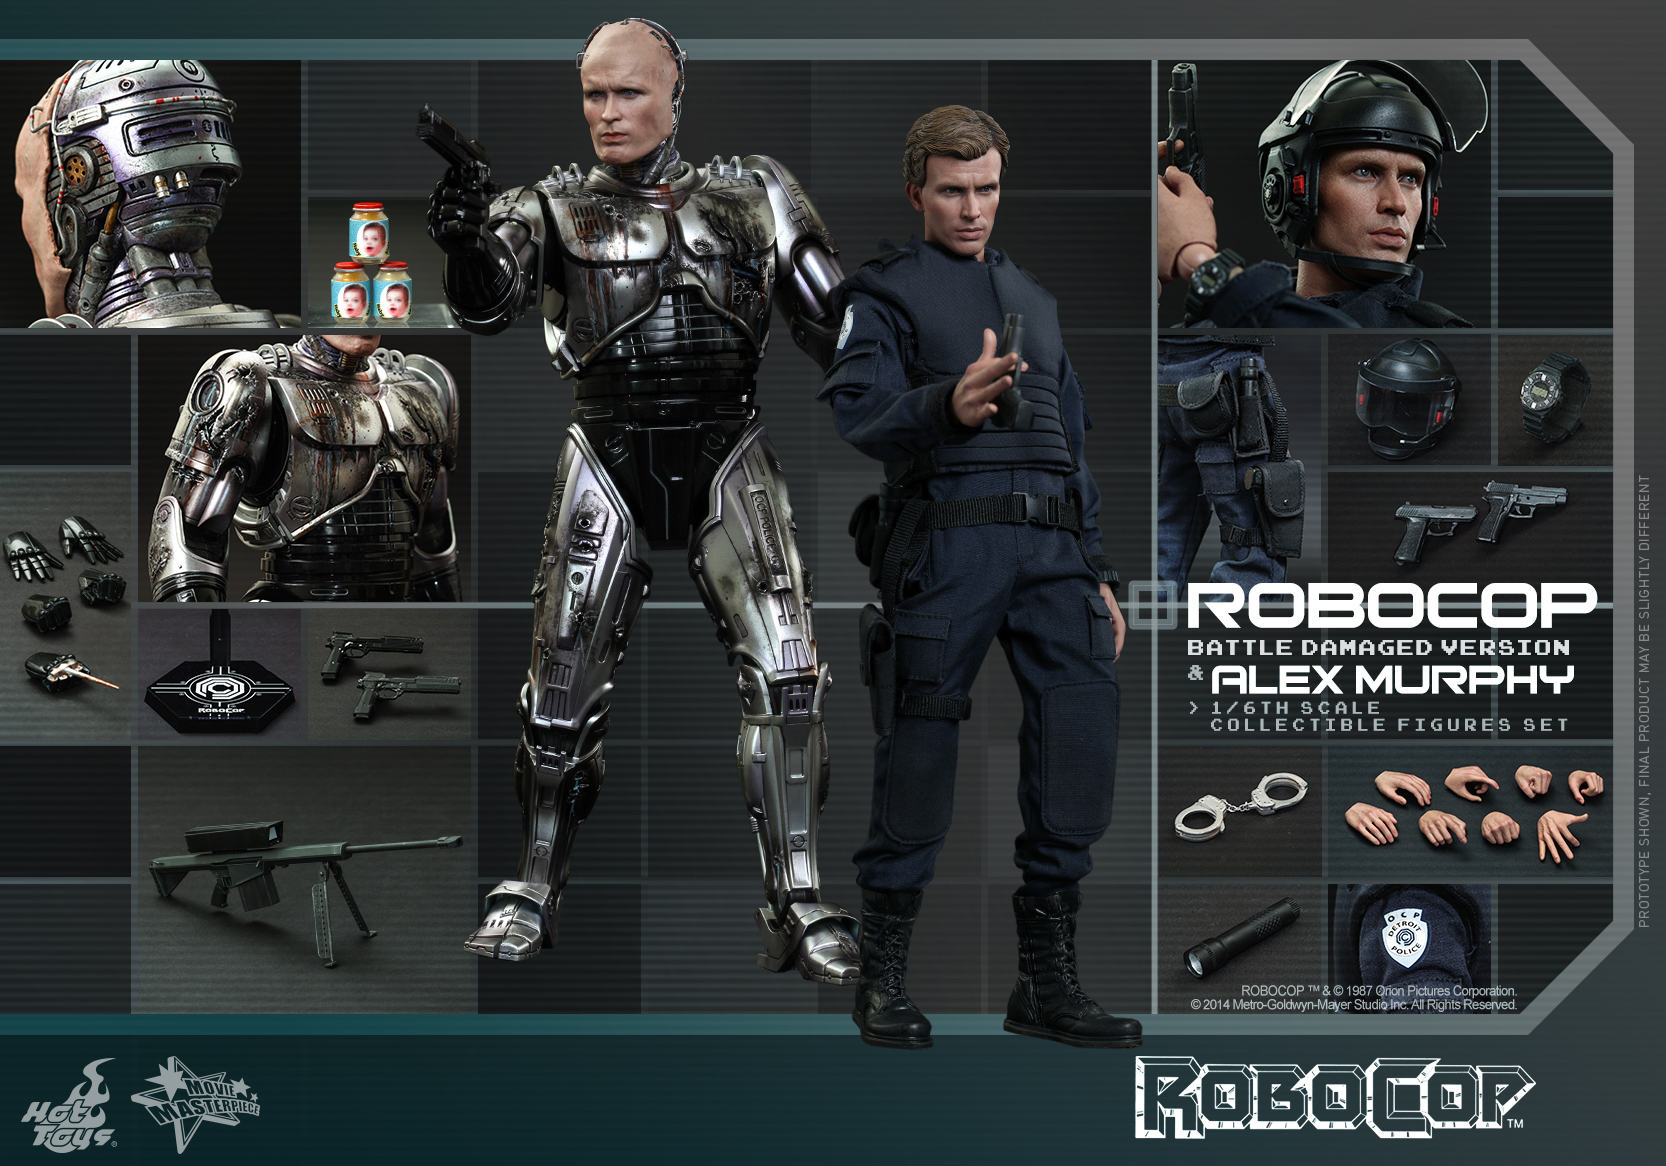 http://www.sideshowtoy.com/wp-content/uploads/2014/10/Hot-Toys-RoboCop-RoboCop-Battle-Damaged-Version-and-Alex-Murphy-Collectible-Figures-Set_PR12.jpg